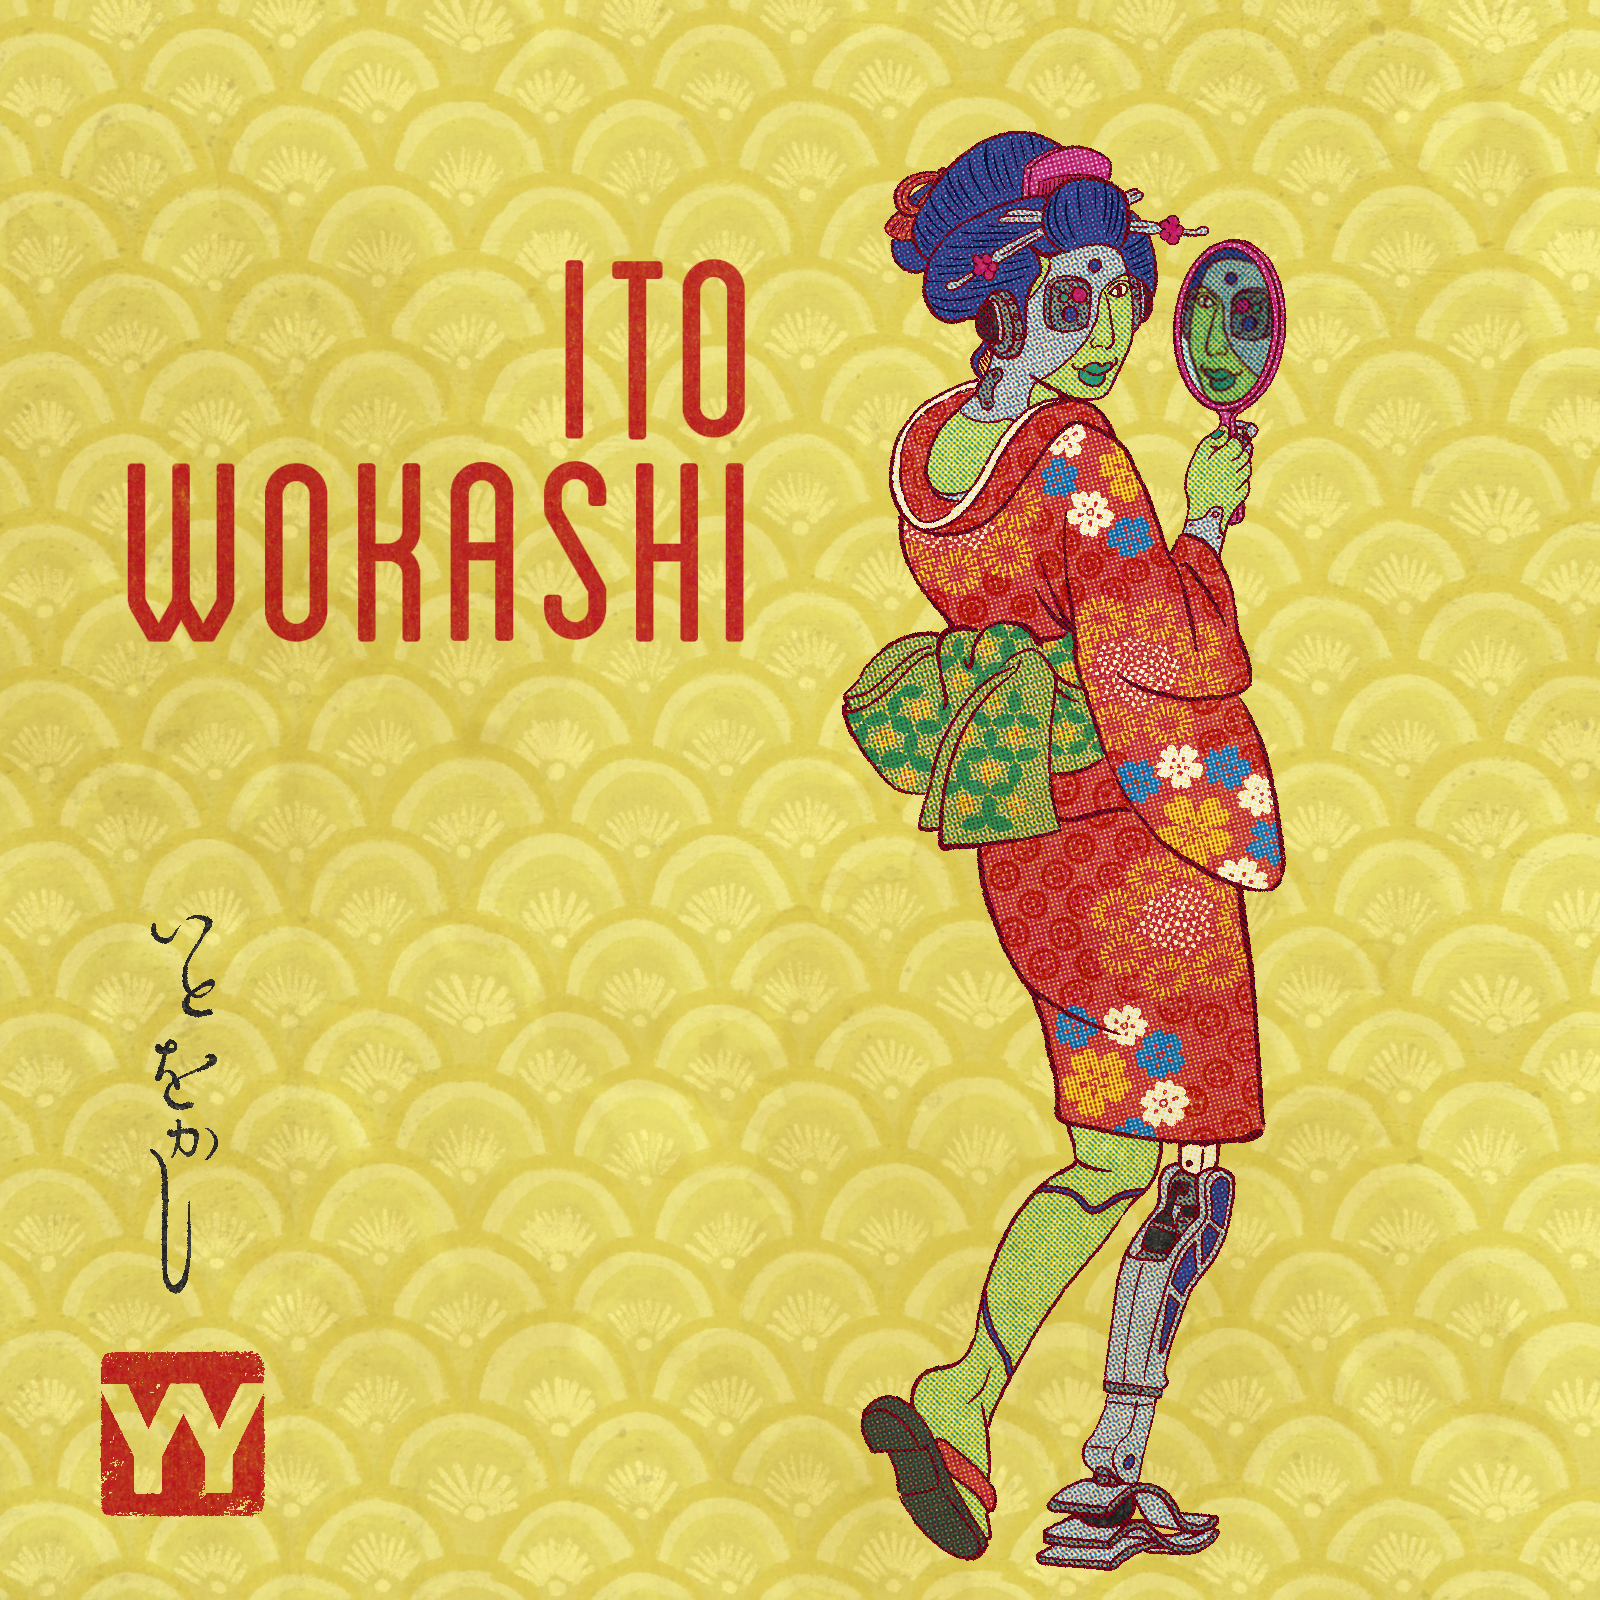 YY – ITO WOKASHI